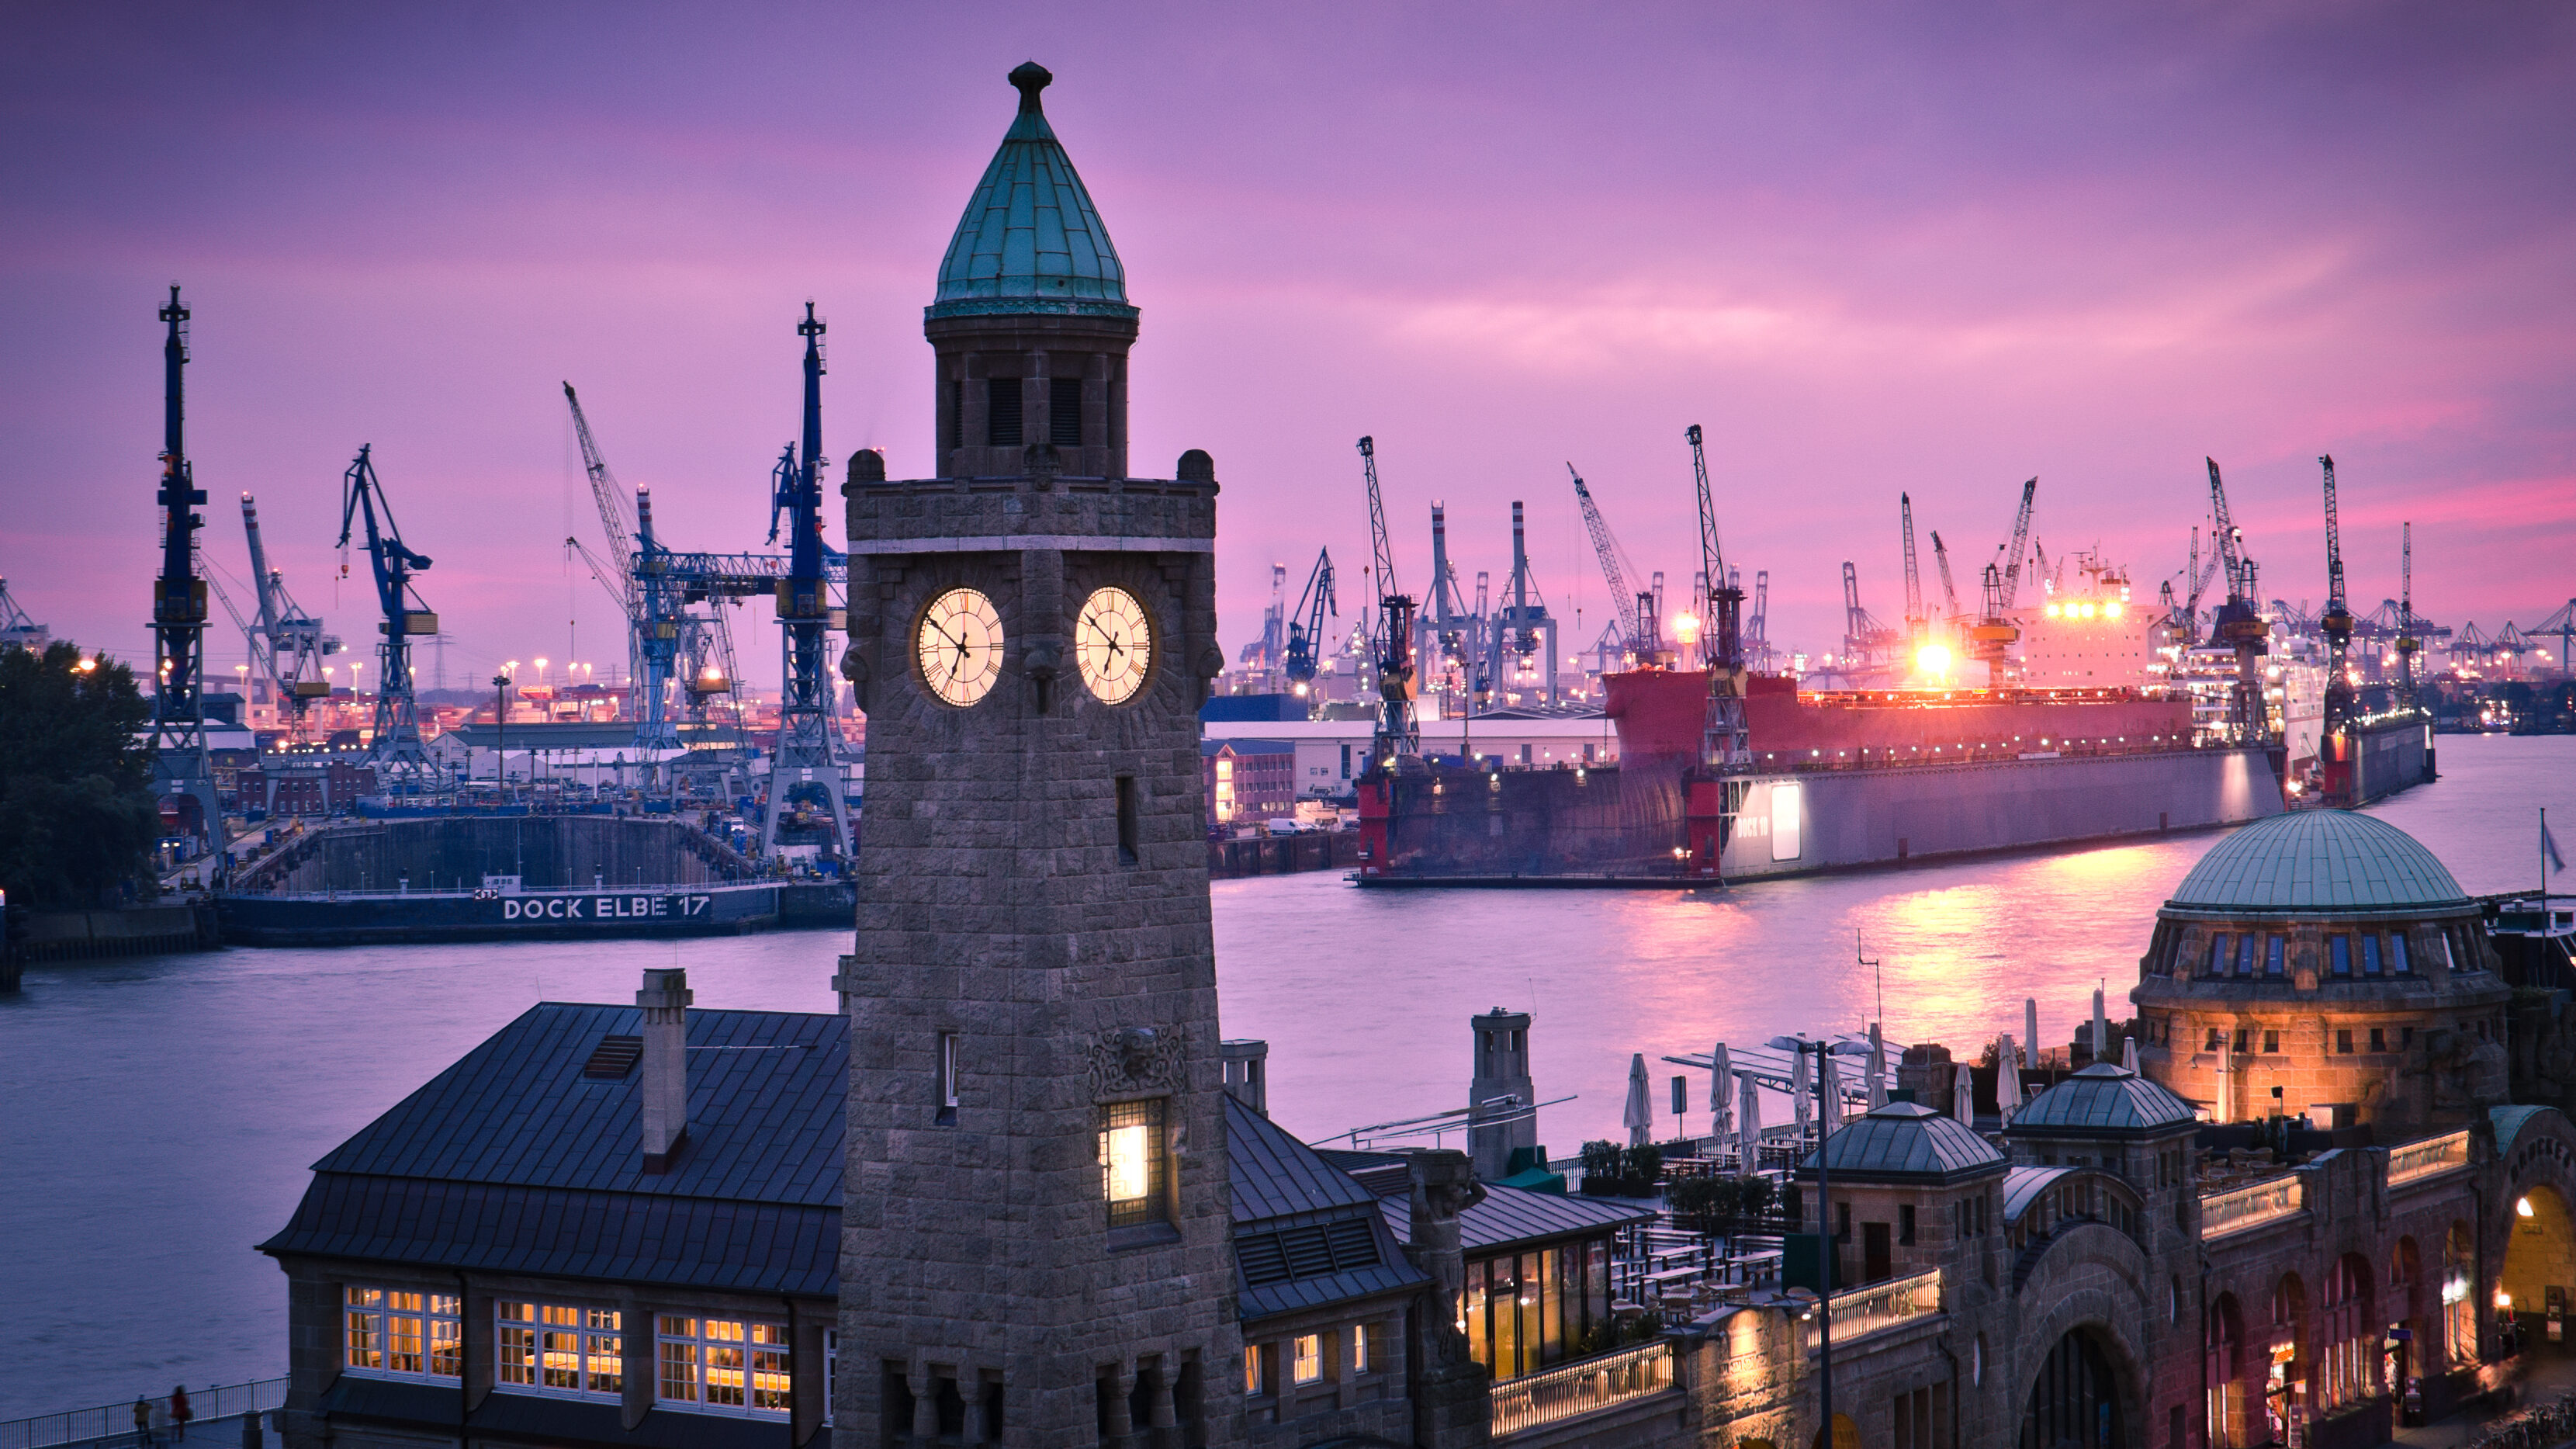 Port of Hamburg in Germany.